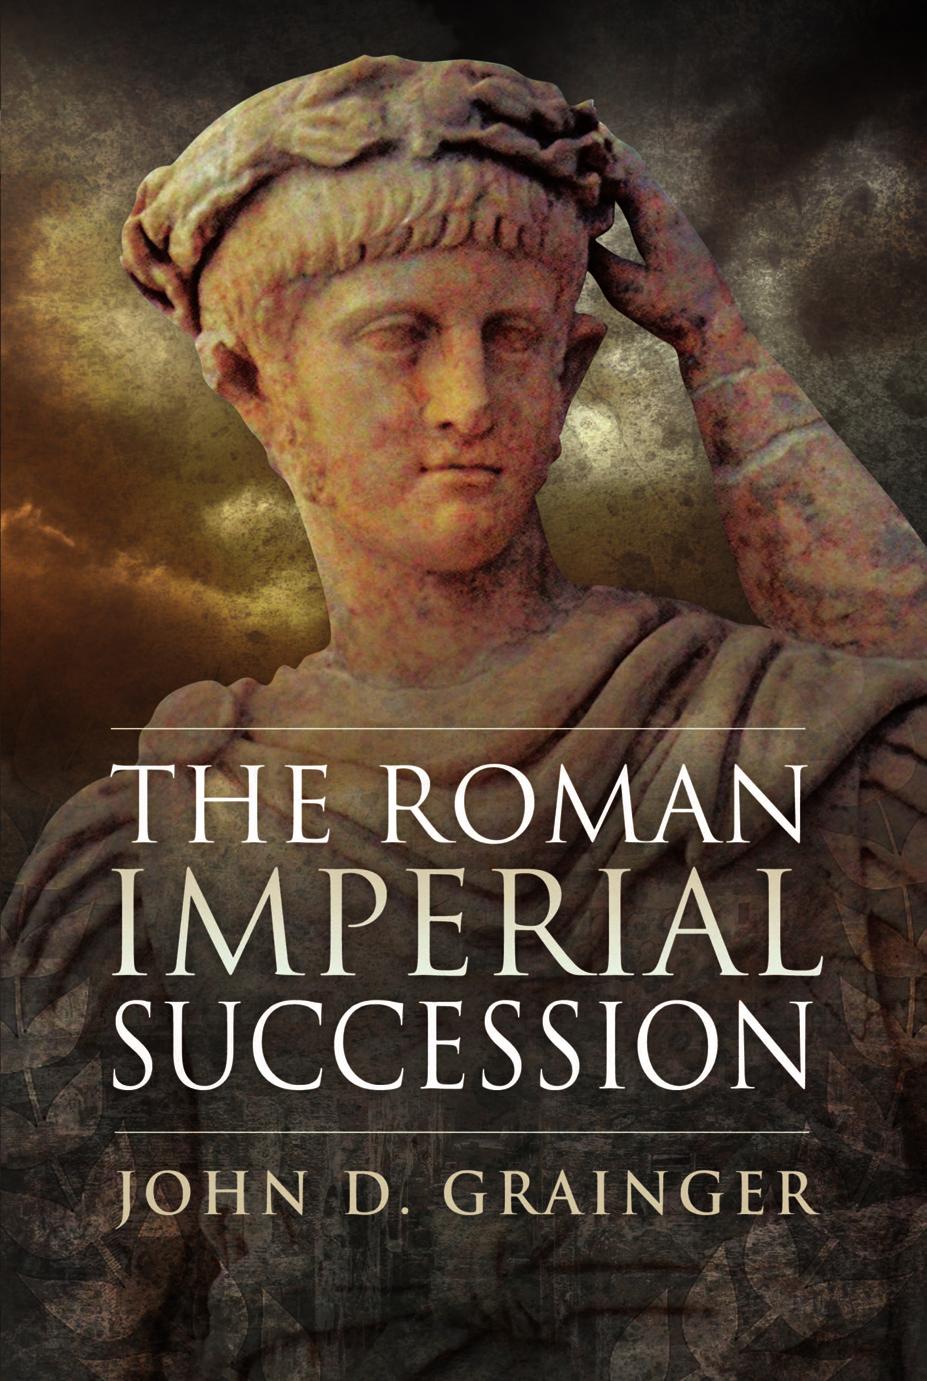 The Roman Imperial Succession by John D. Grainger